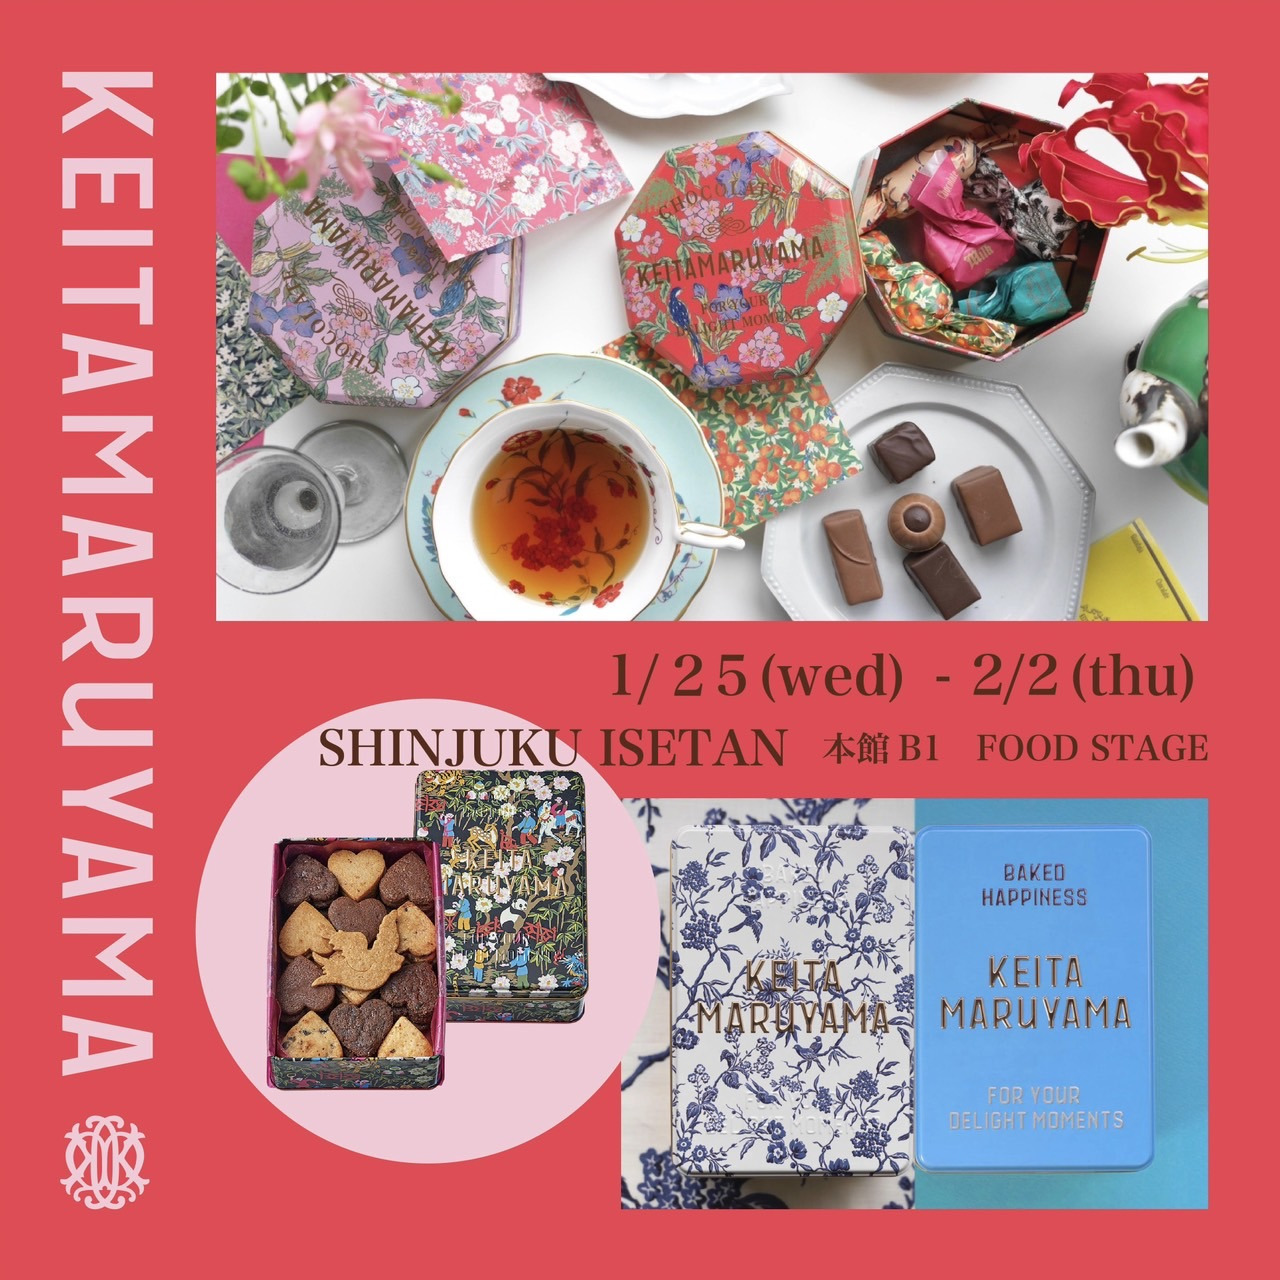 KEITAMARUYAMA "OMOTASE" PROJECT in 伊勢丹新宿店